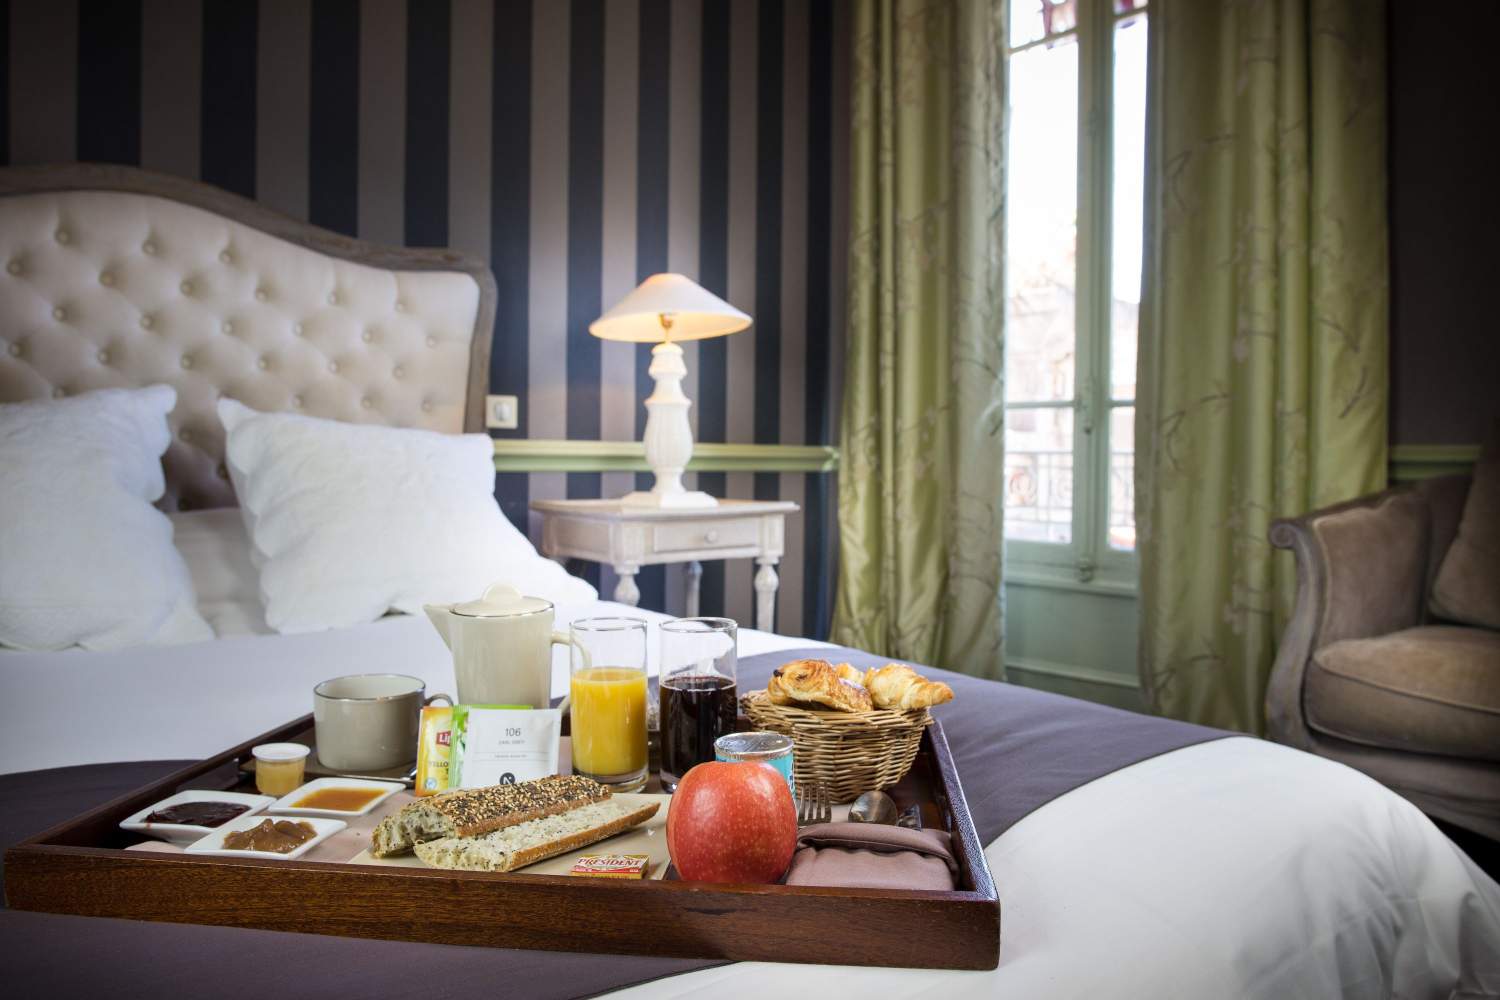 Hotel Helvie room and breakfast